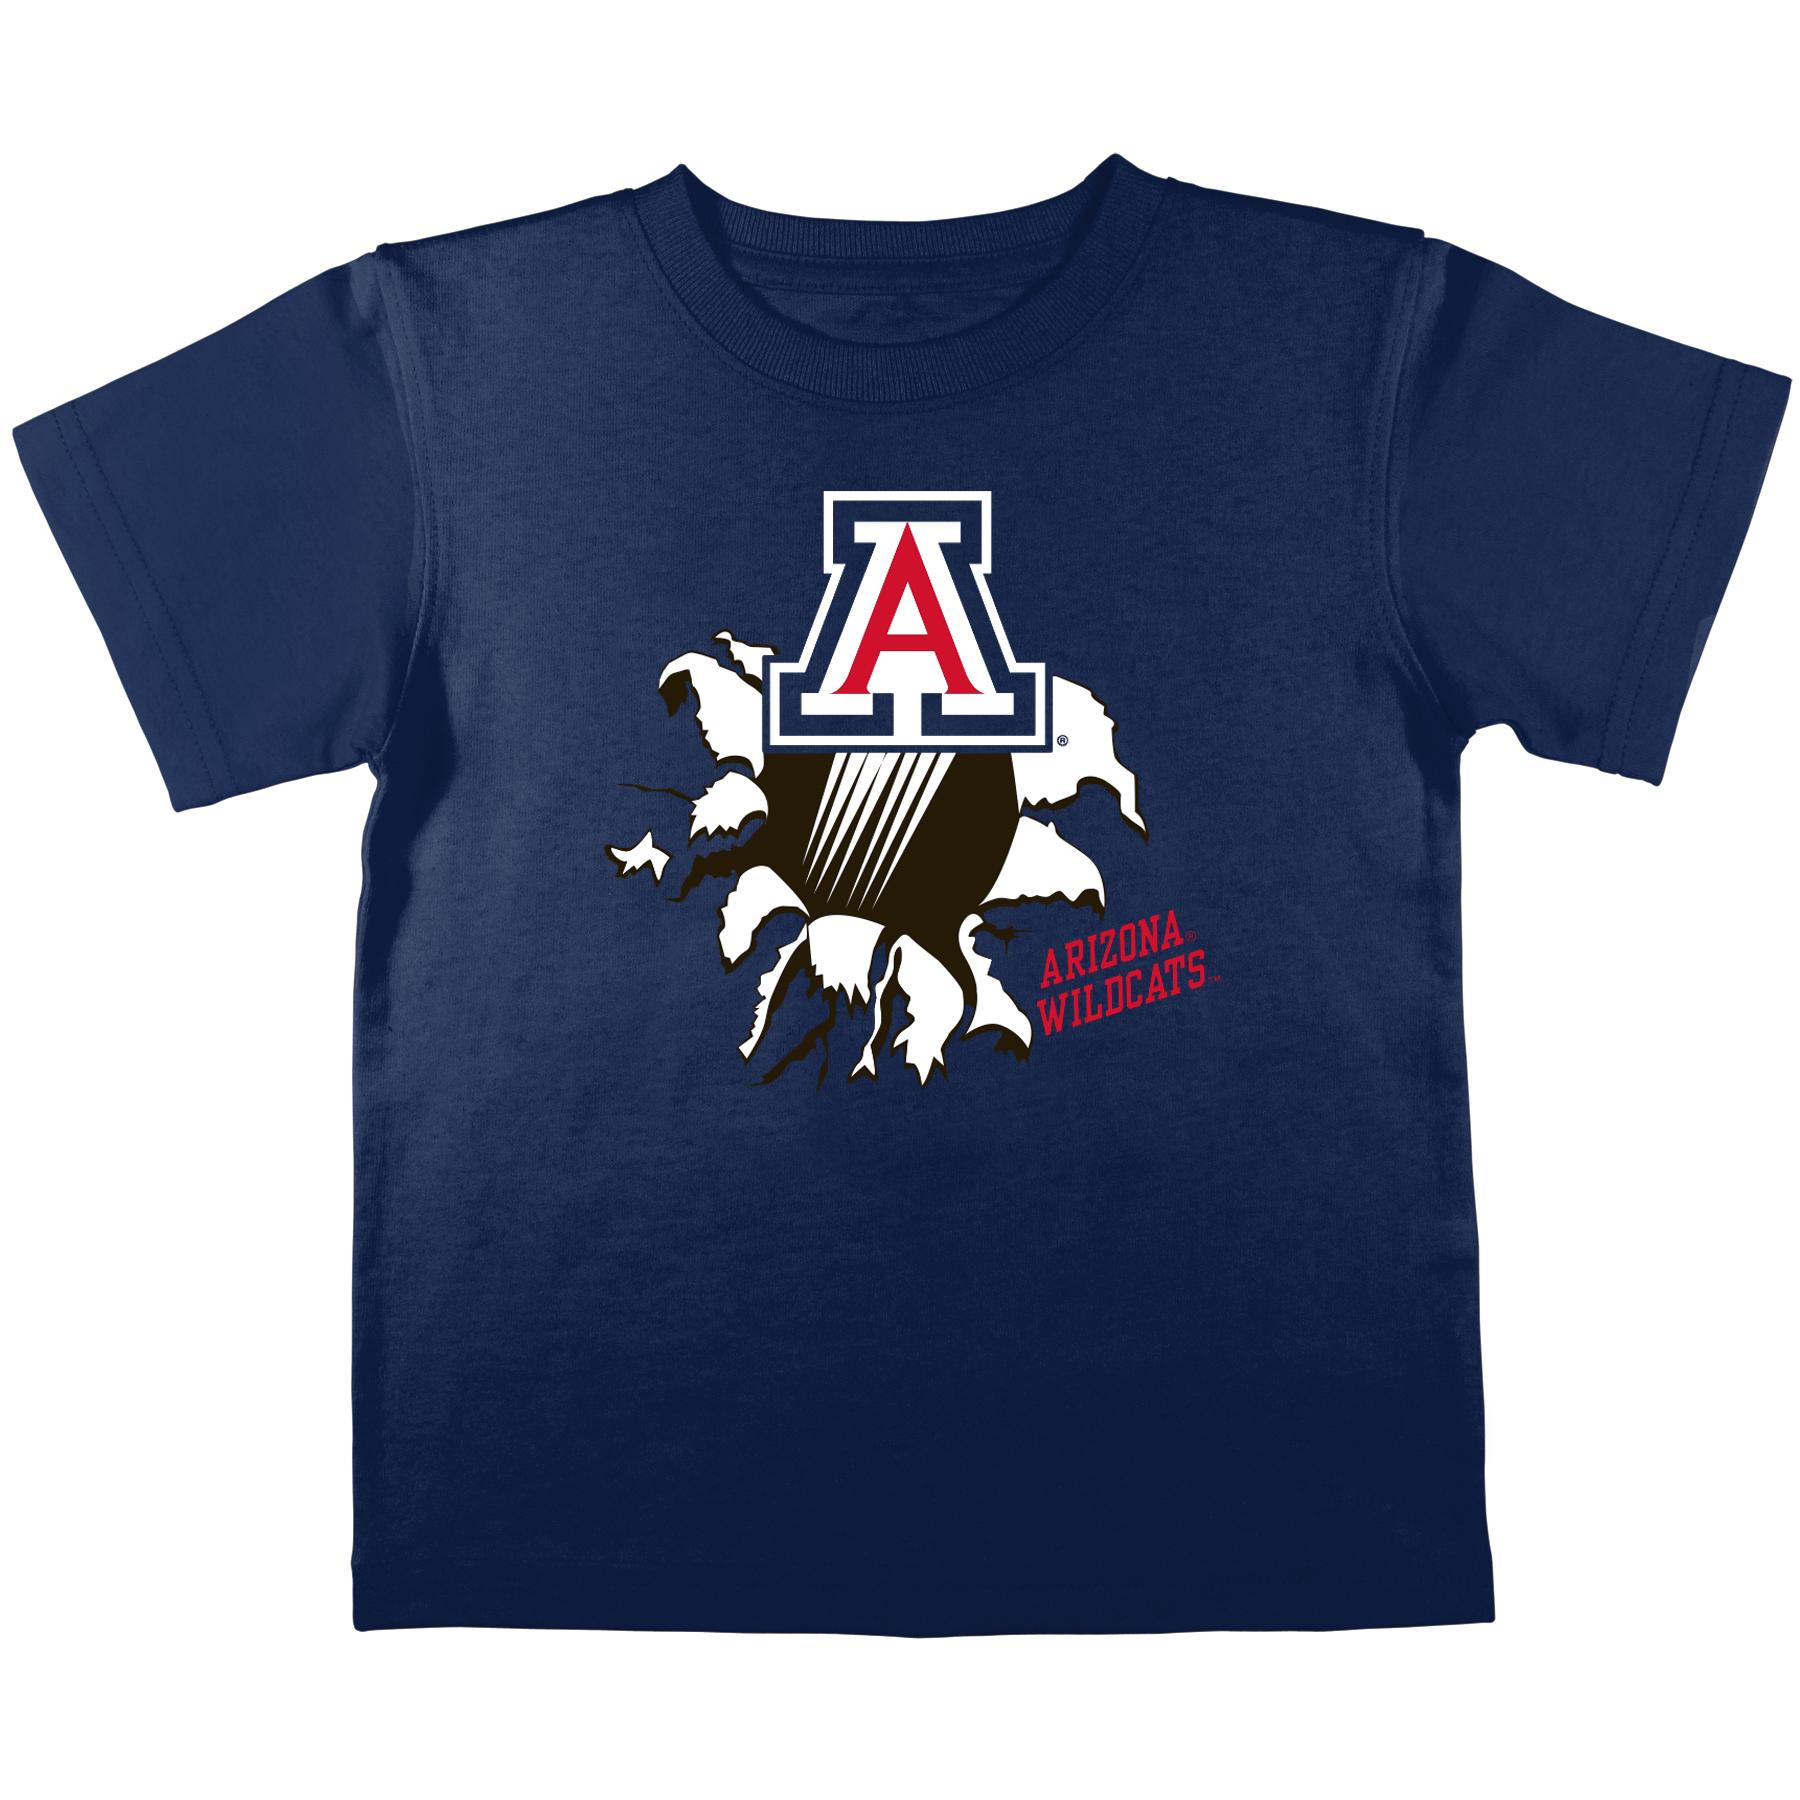 NCAA Toddler Boy's T-Shirt - University of Arizona Wildcats